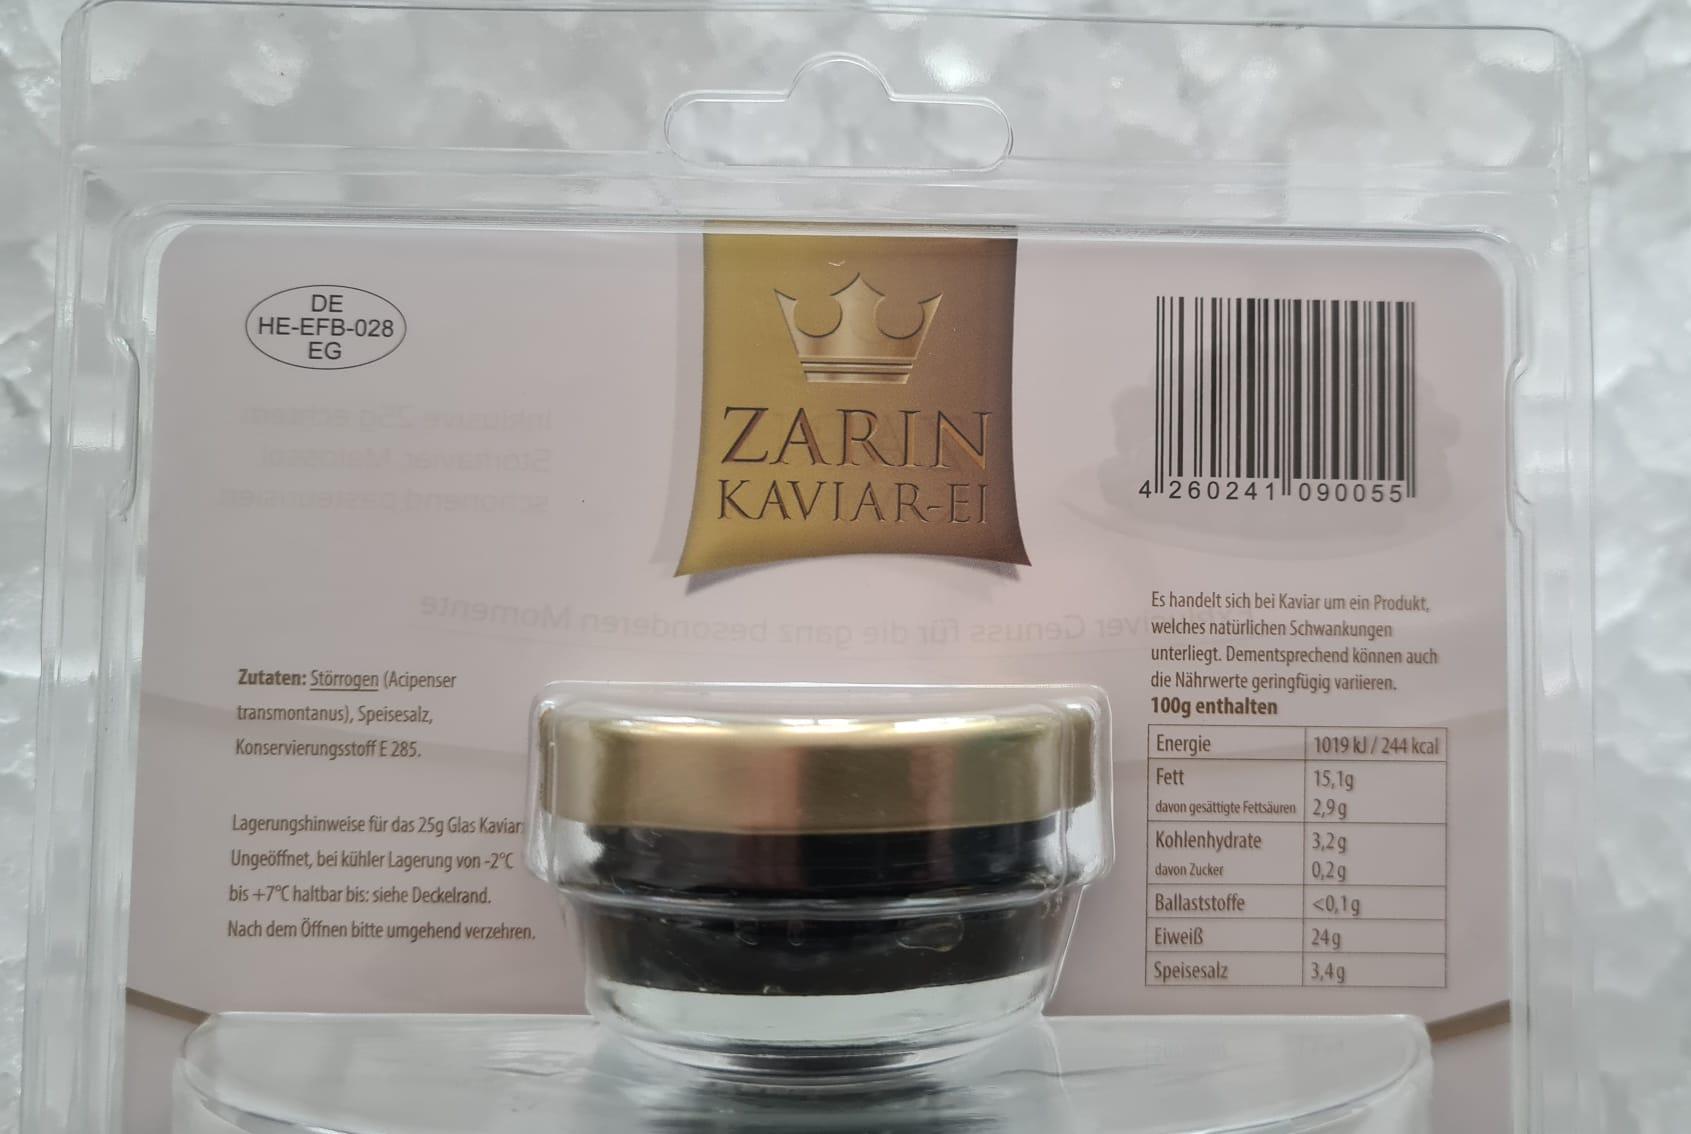 Zarin Kaviar im Faberge Ei